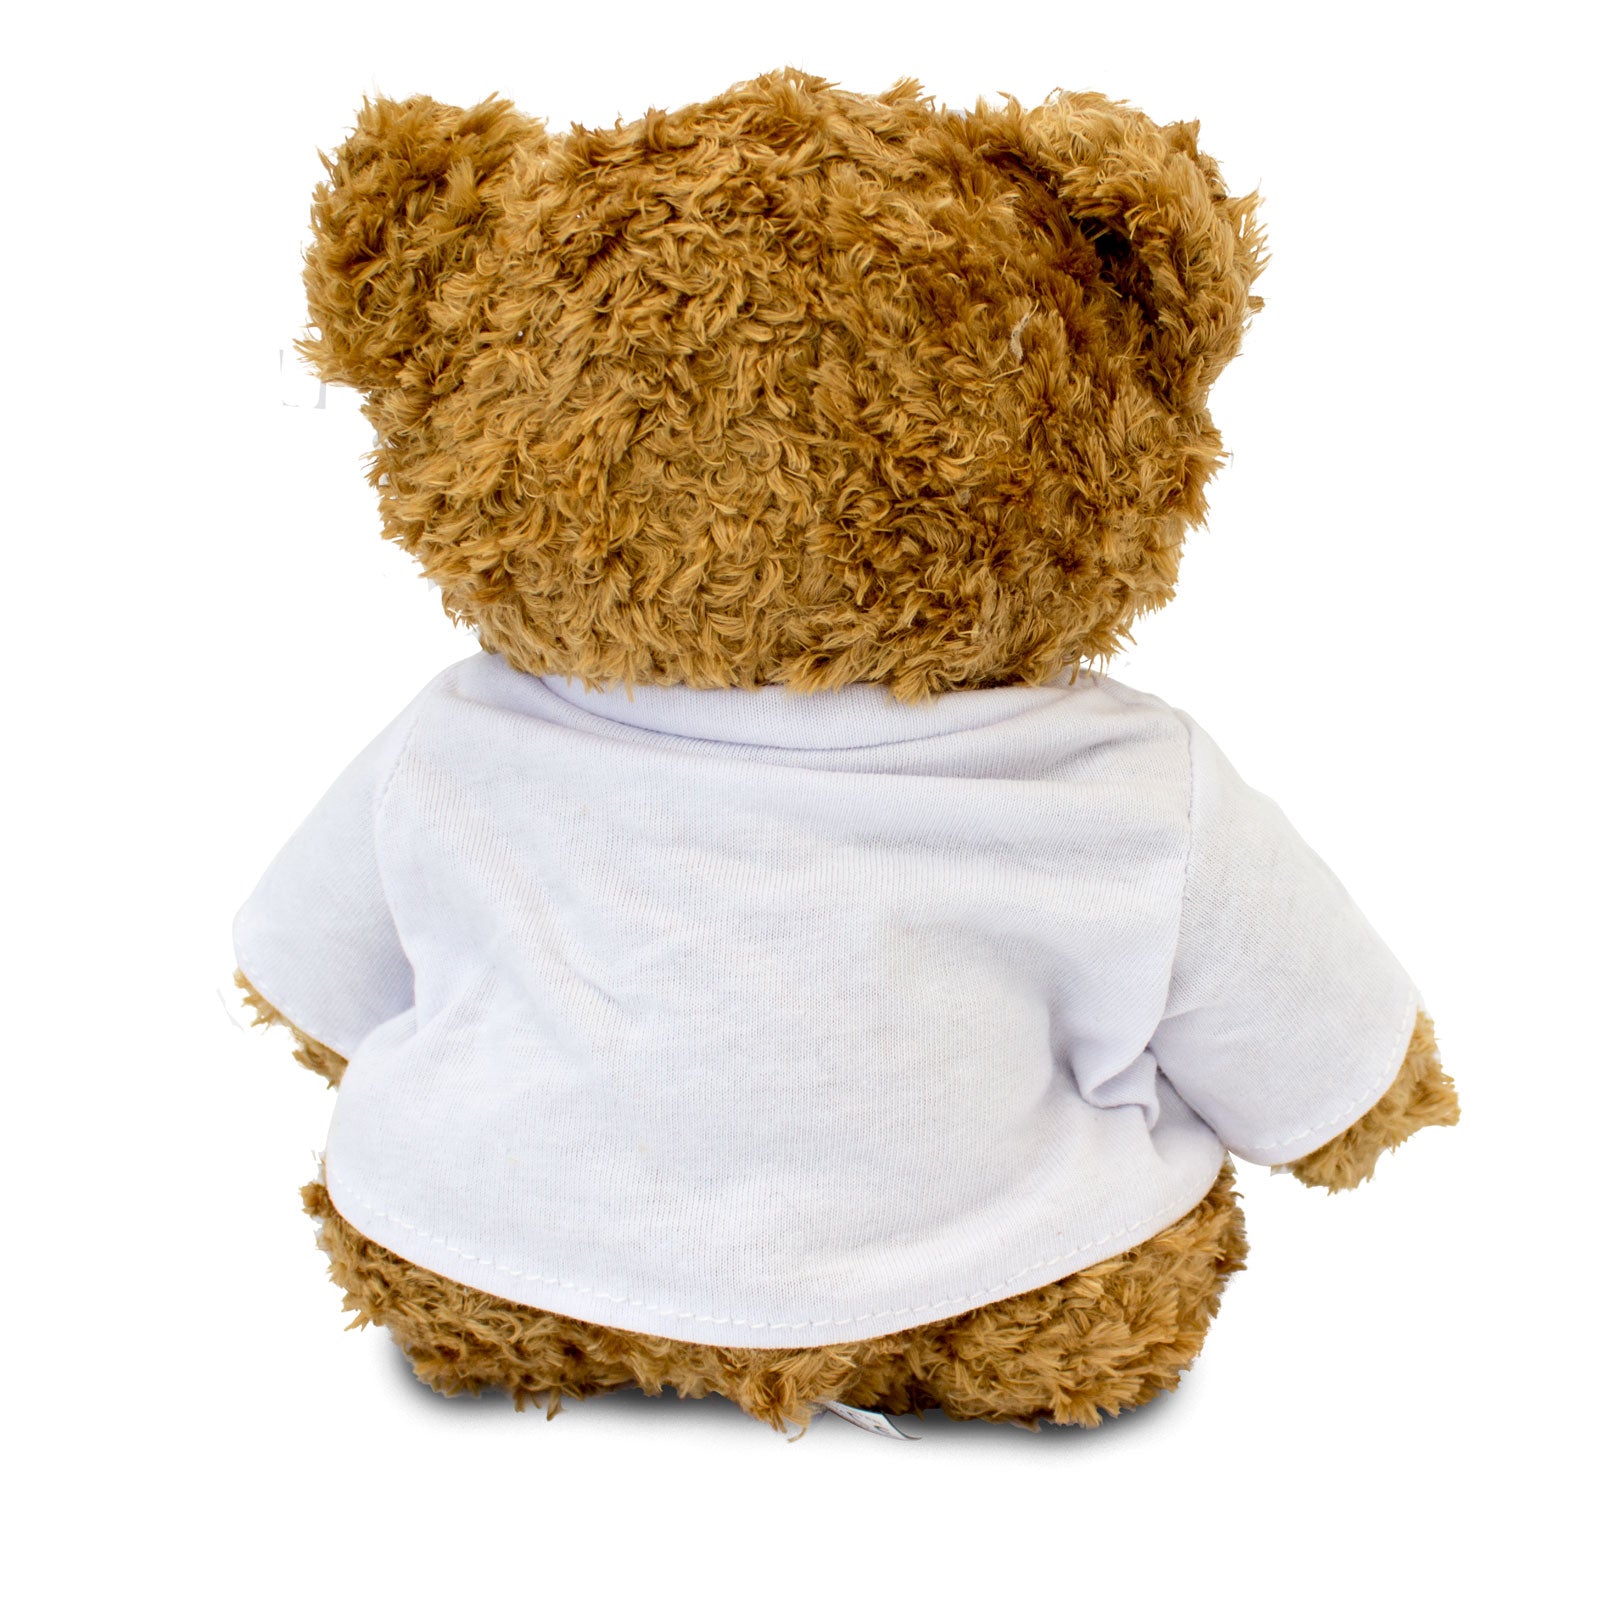 I Love Norwich - Teddy Bear